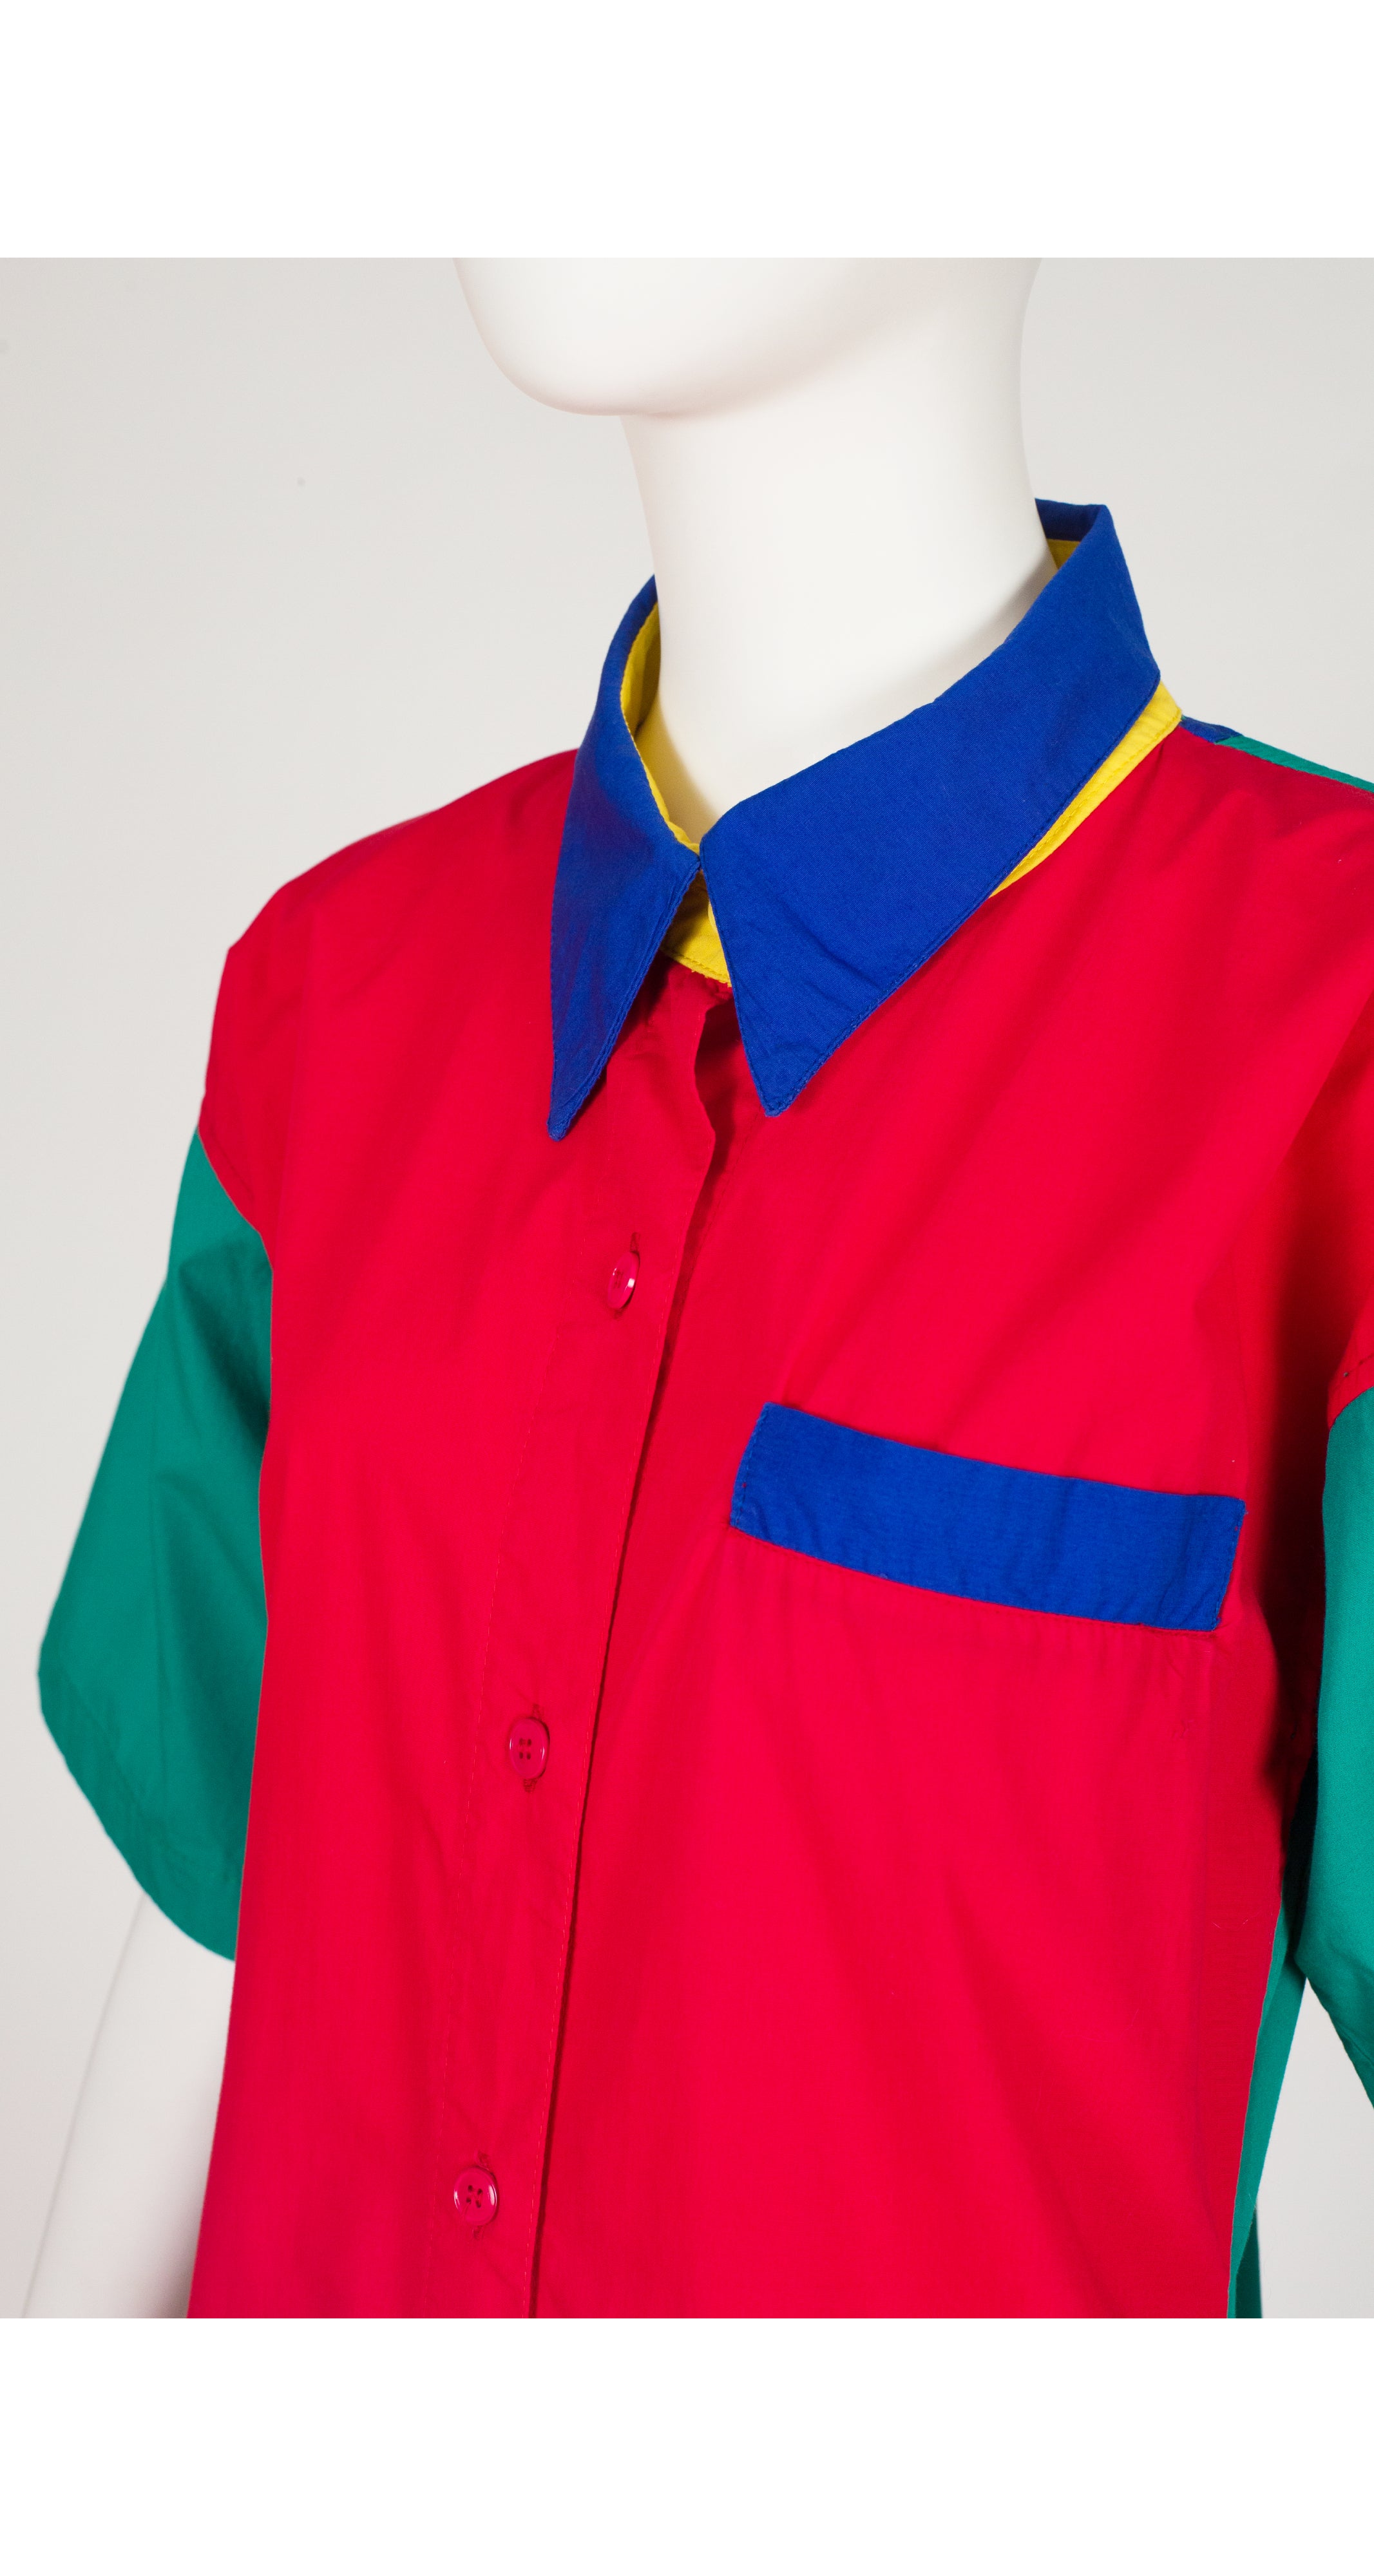 Jean-Charles de Castelbajac 1988 S/S Documented Color Block Dress